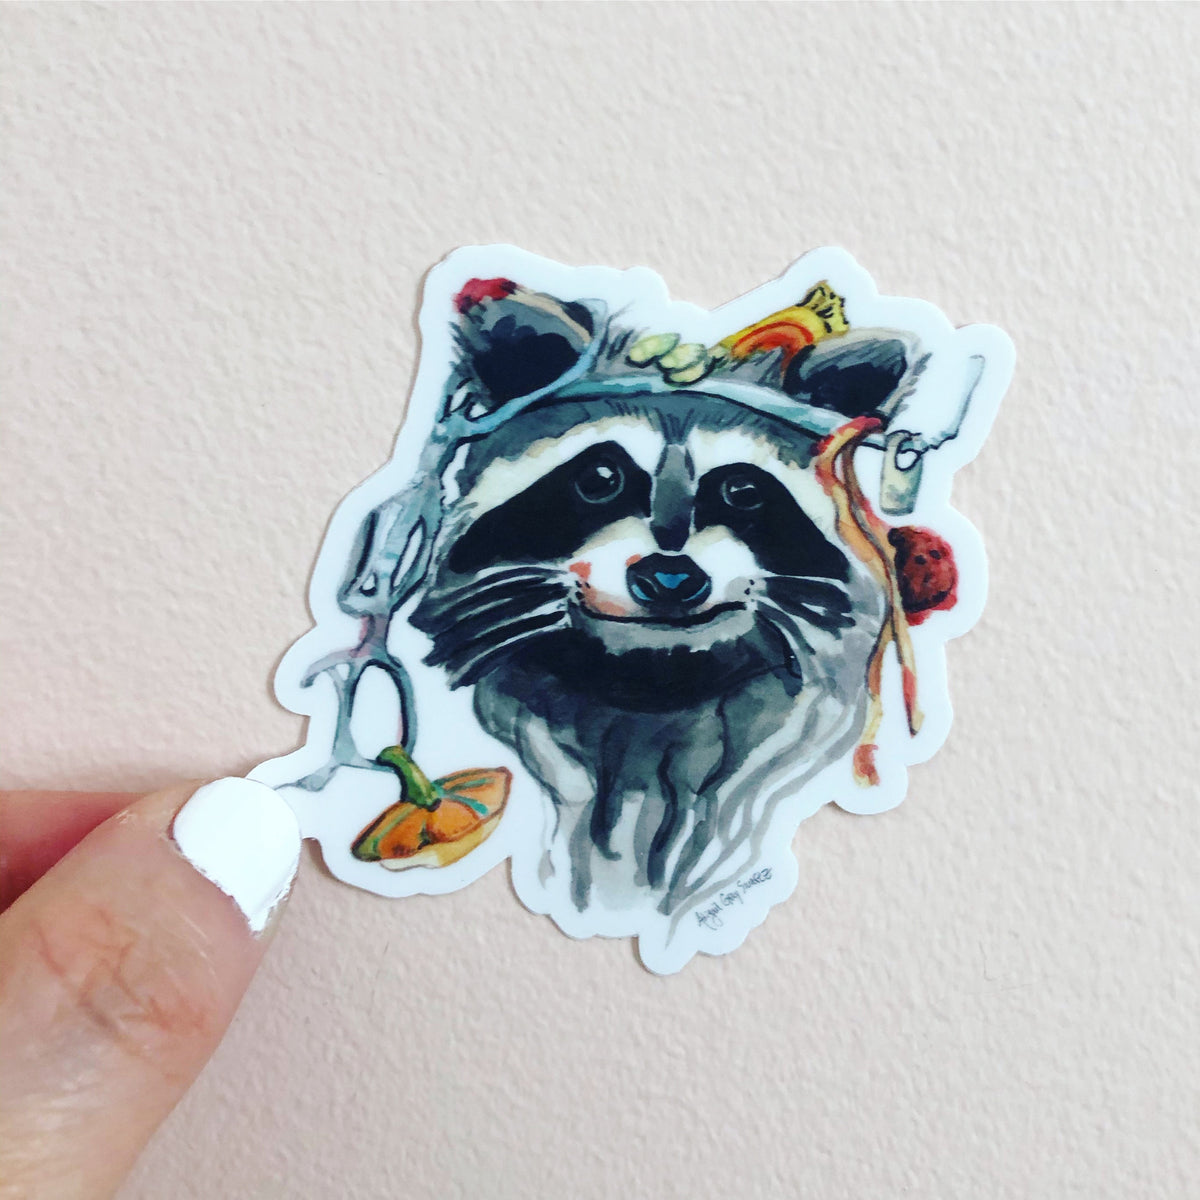 Dumpster Diver, Trash panda Sticker. Raccoon portrait sticker by Abigail Gray Swartz